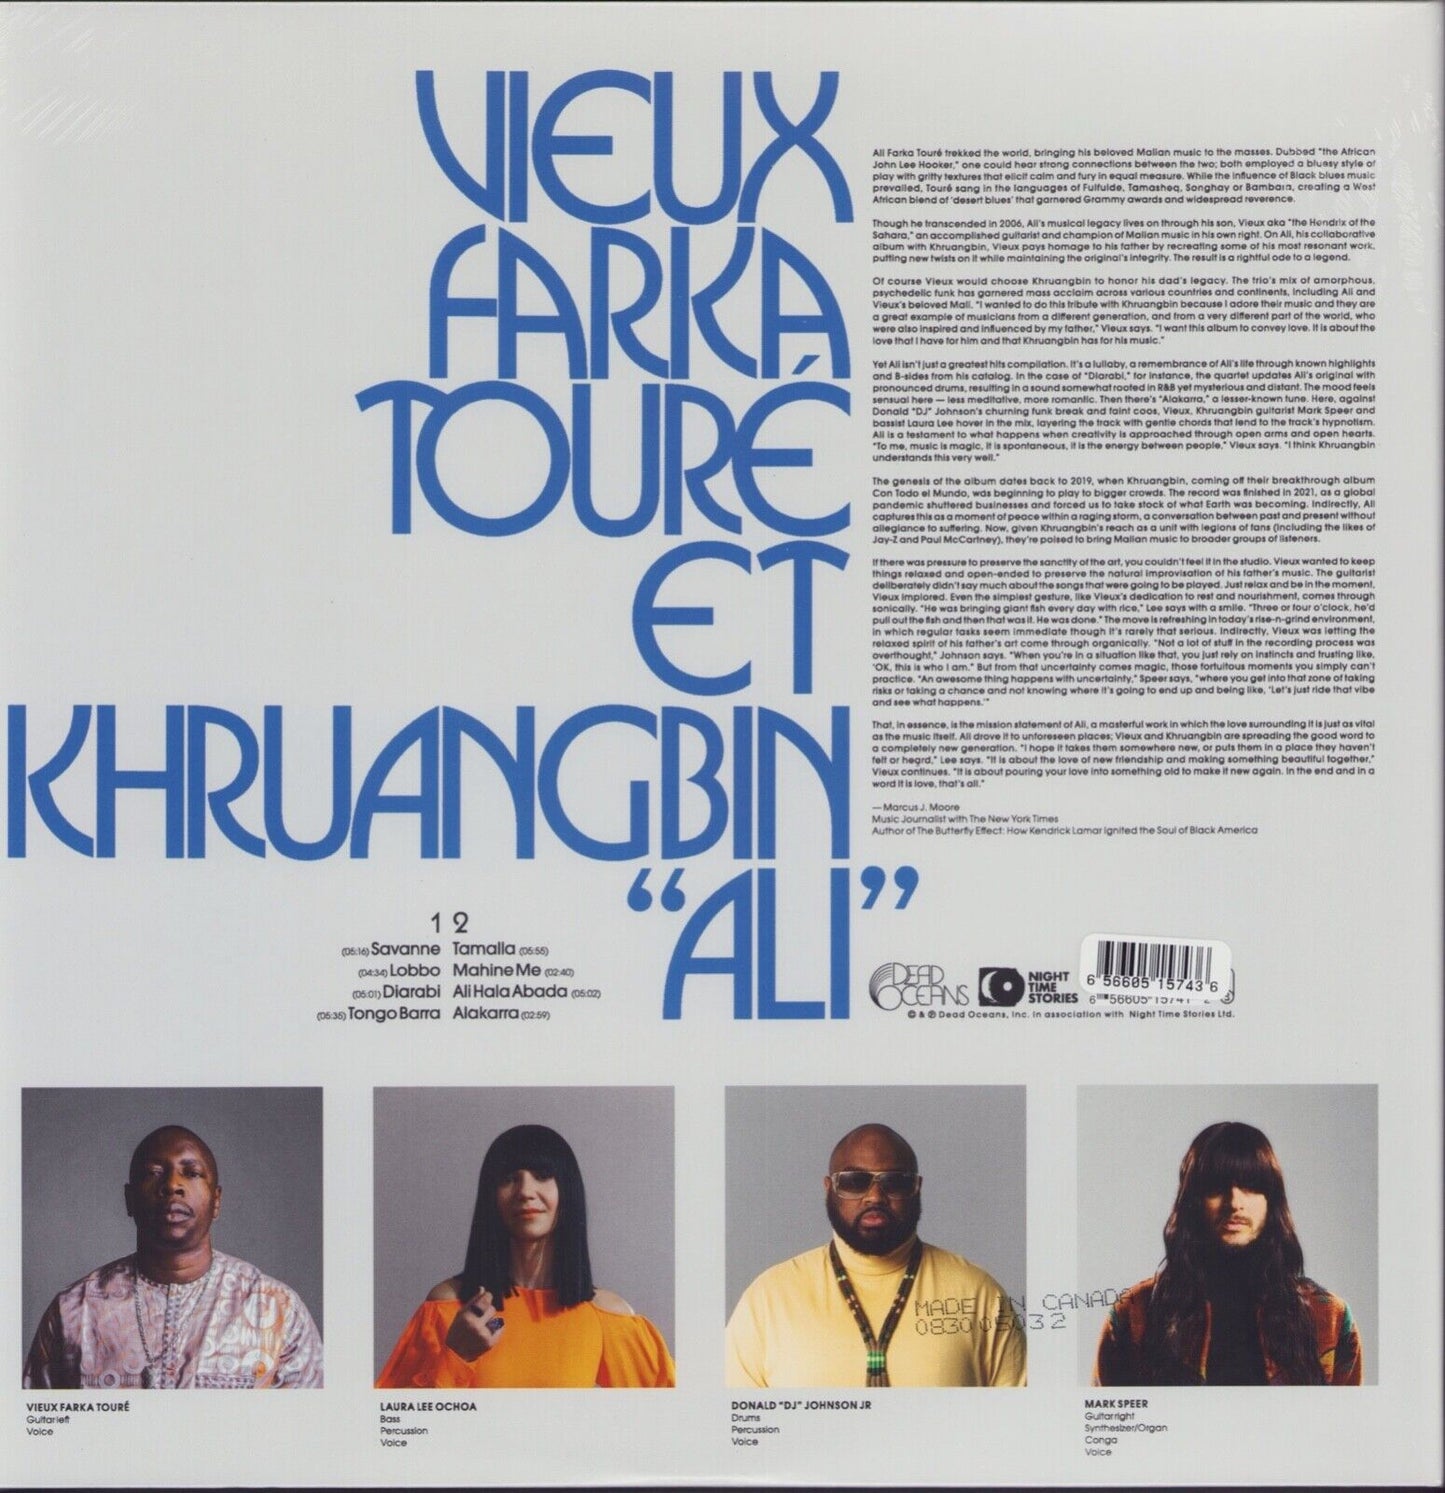 Vieux Farka Touré Et Khruangbin ‎- Ali Jade Green Vinyl LP Limited Edition